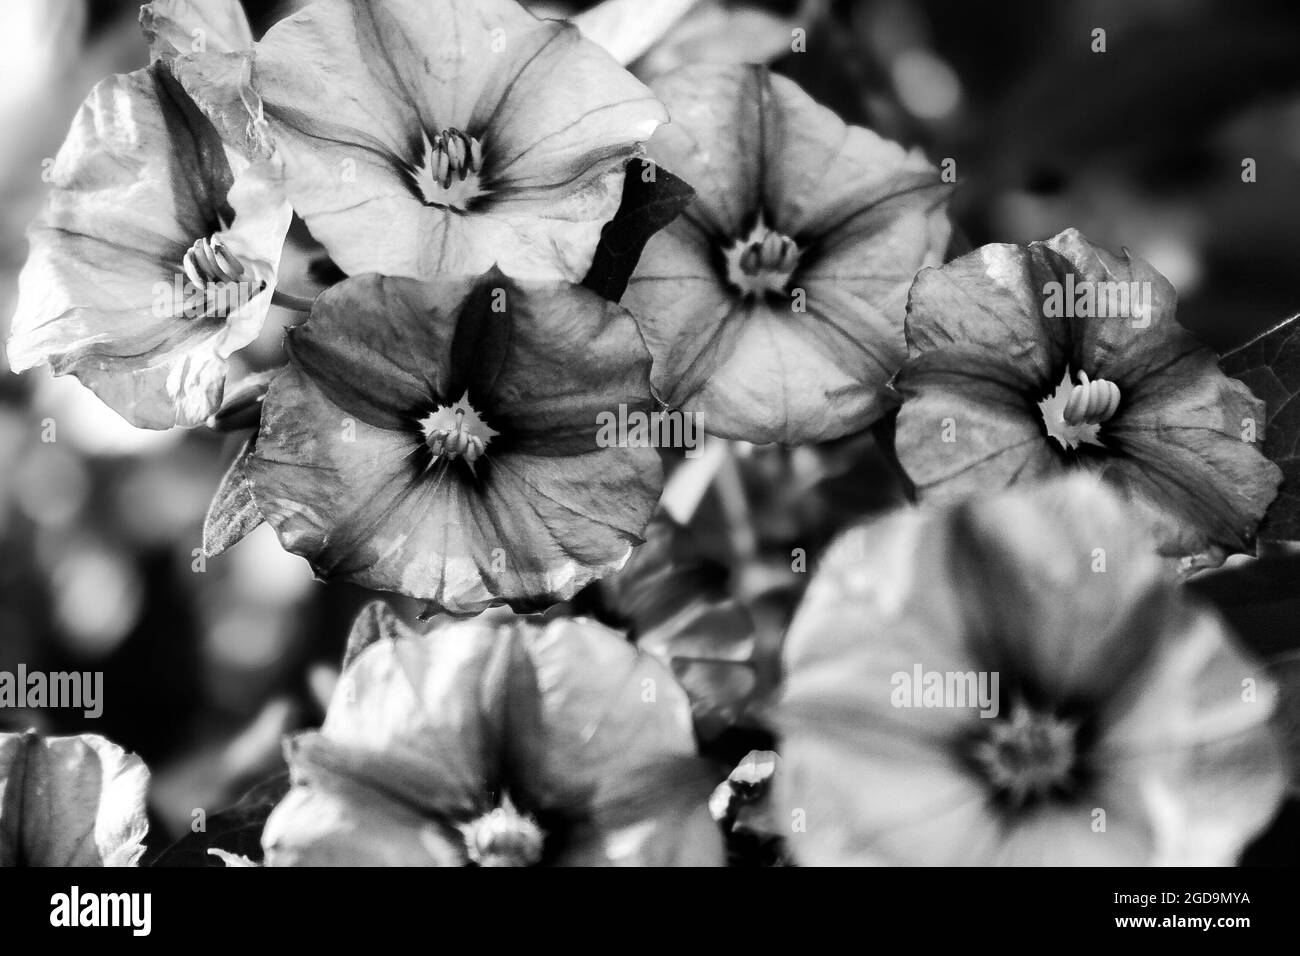 Garden petunia Black and White Stock Photos & Images - Alamy